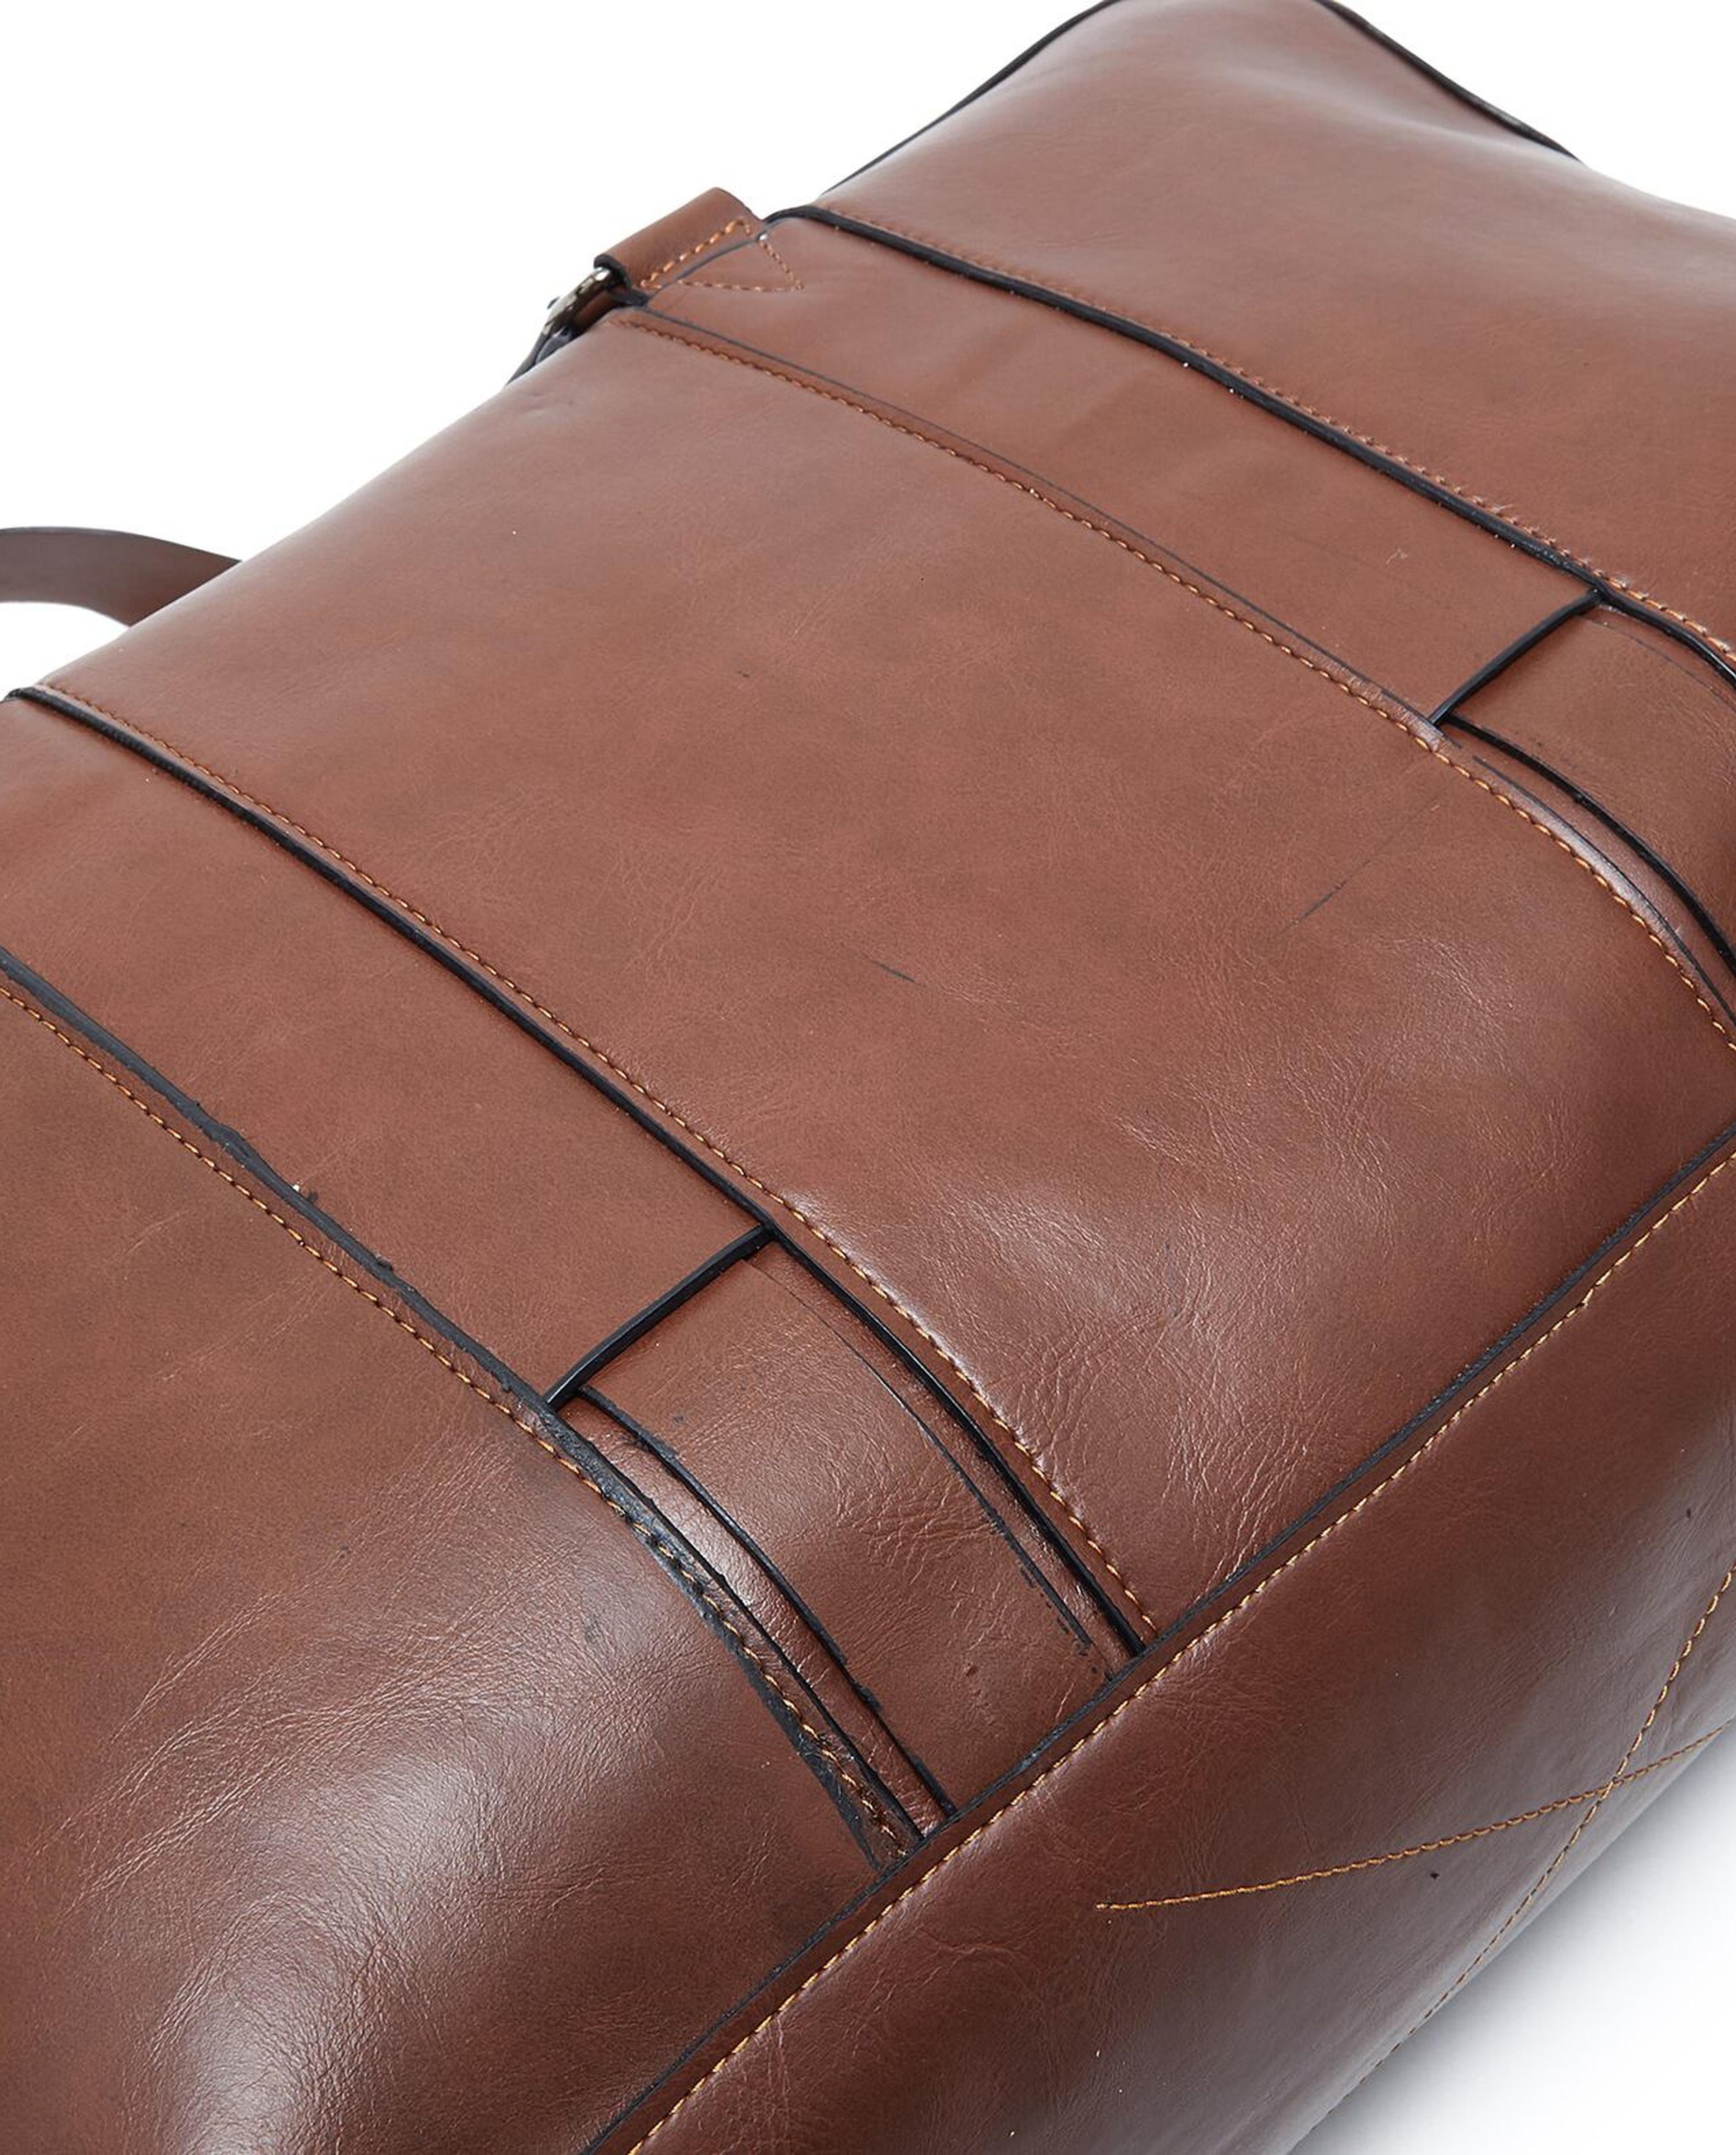 Textured Duffle Bag